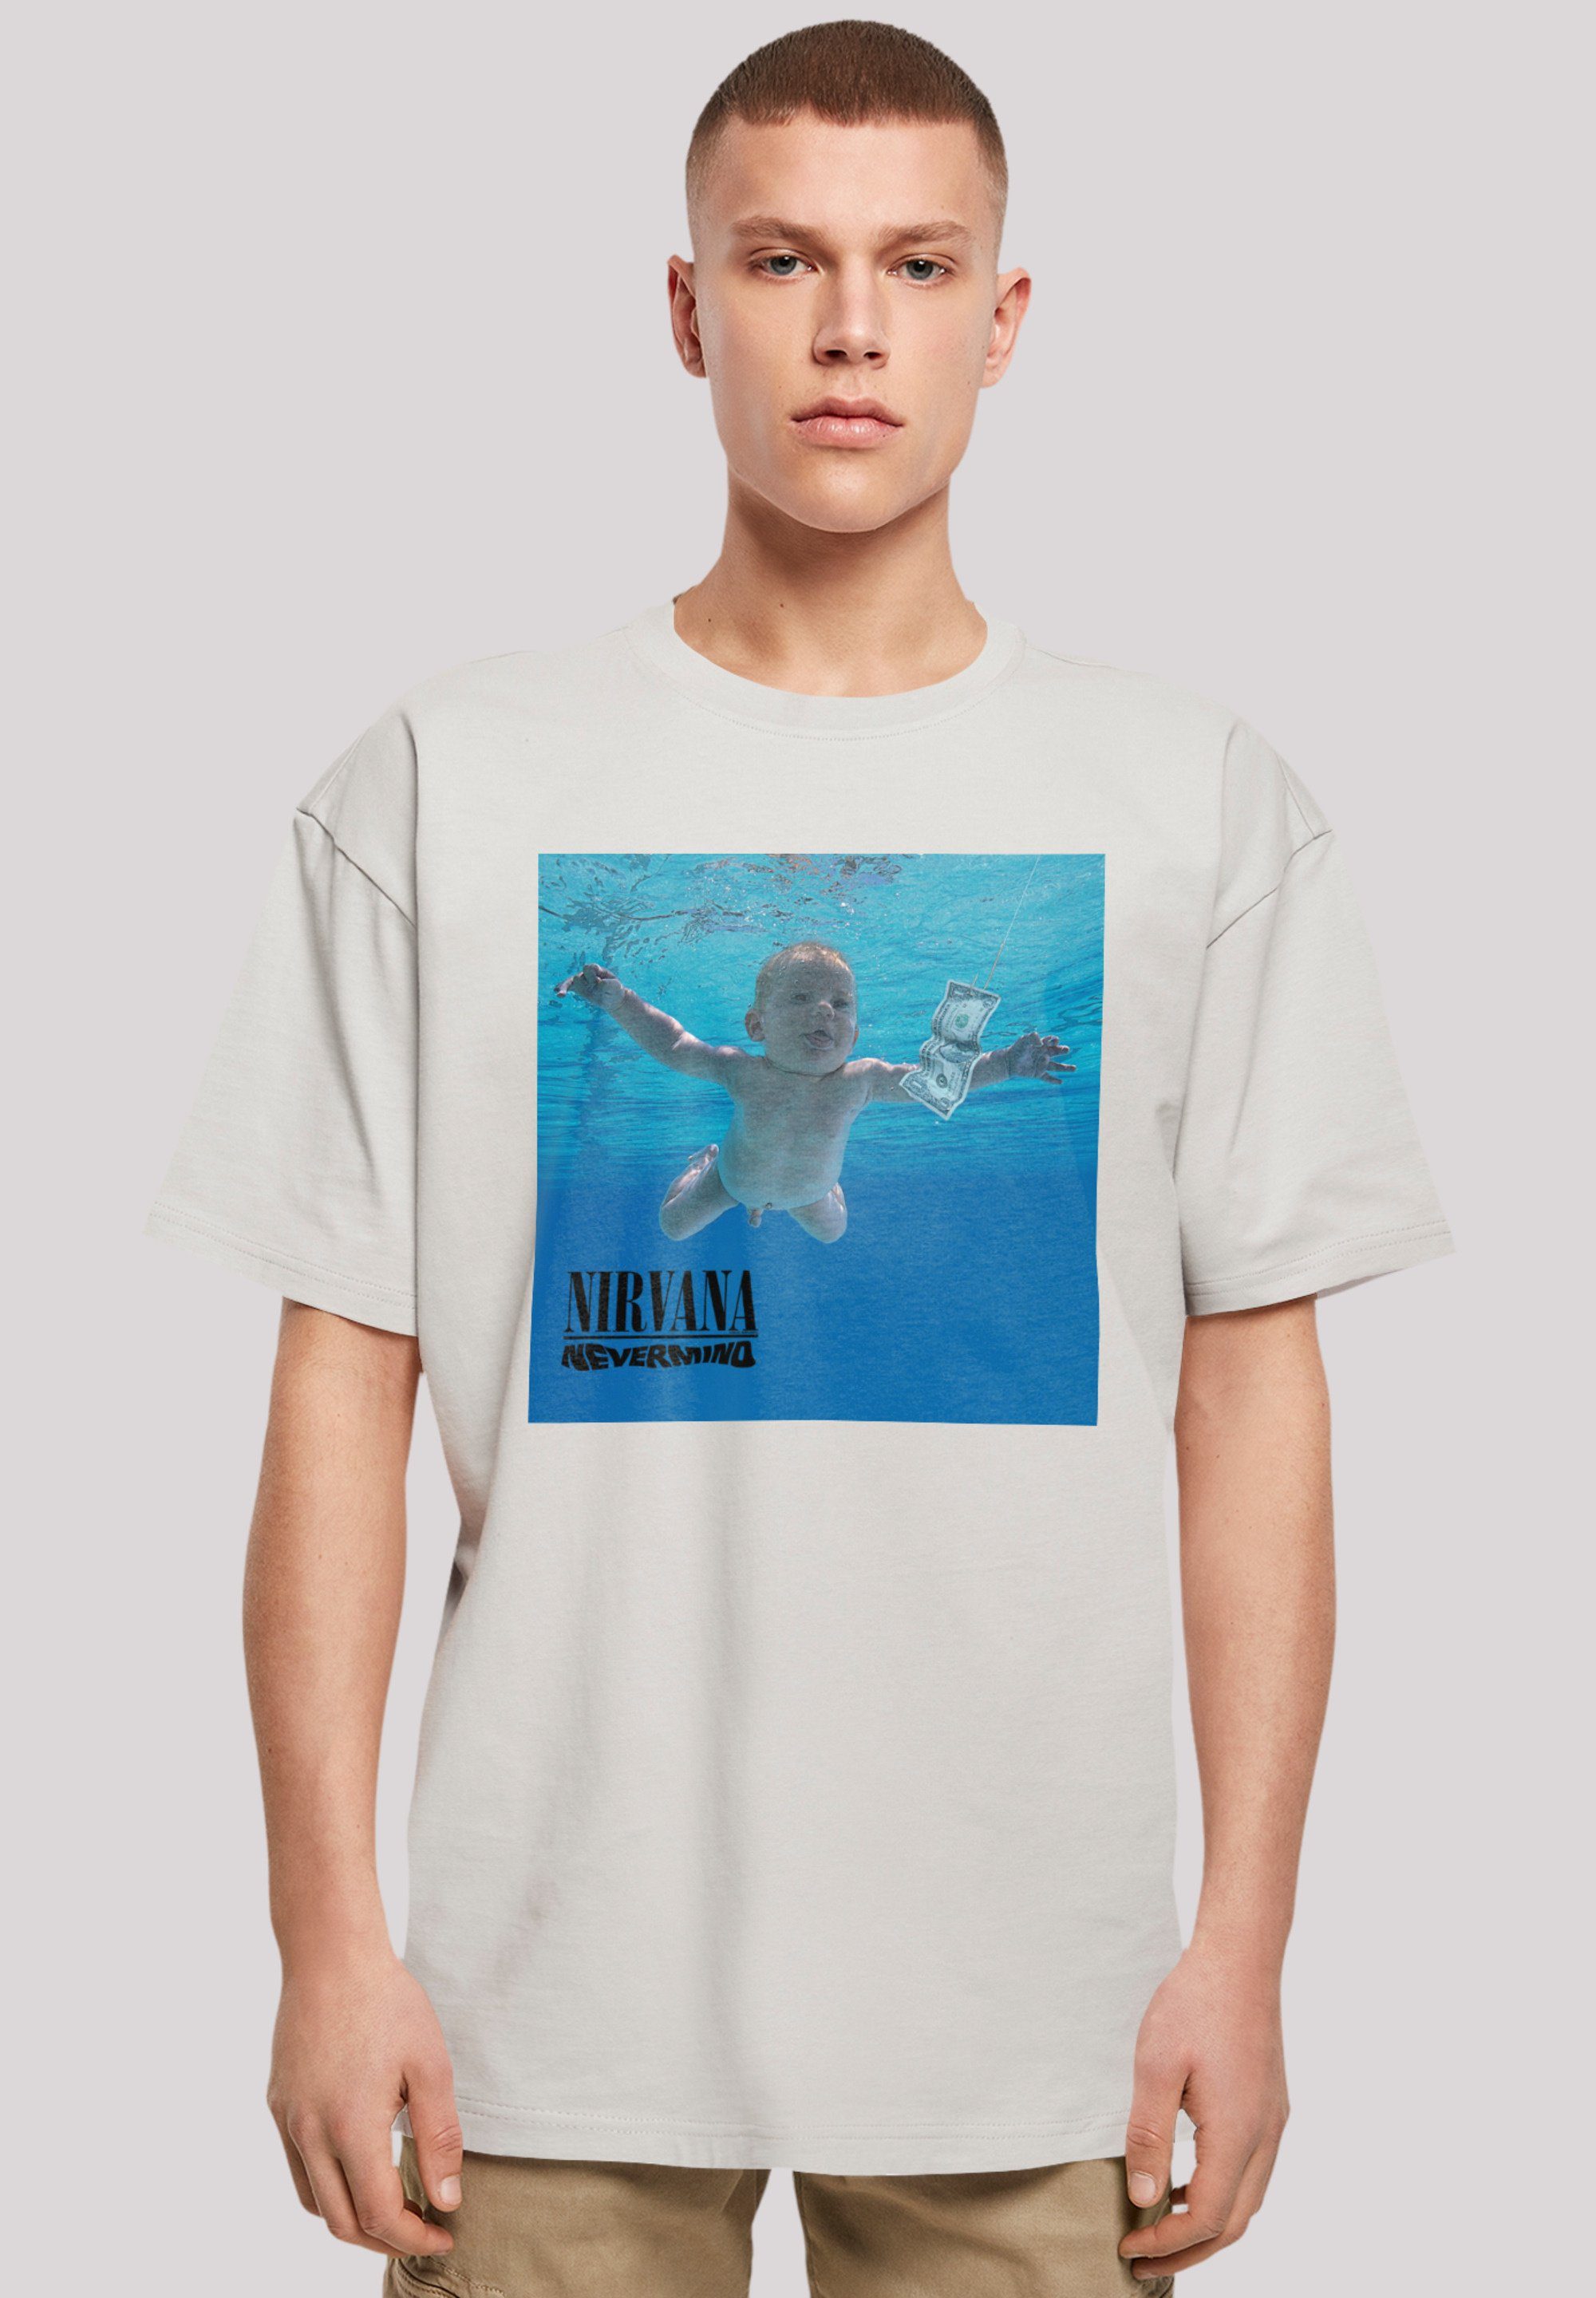 F4NT4STIC T-Shirt Nirvana Rock Band Nevermind Album Premium Qualität lightasphalt